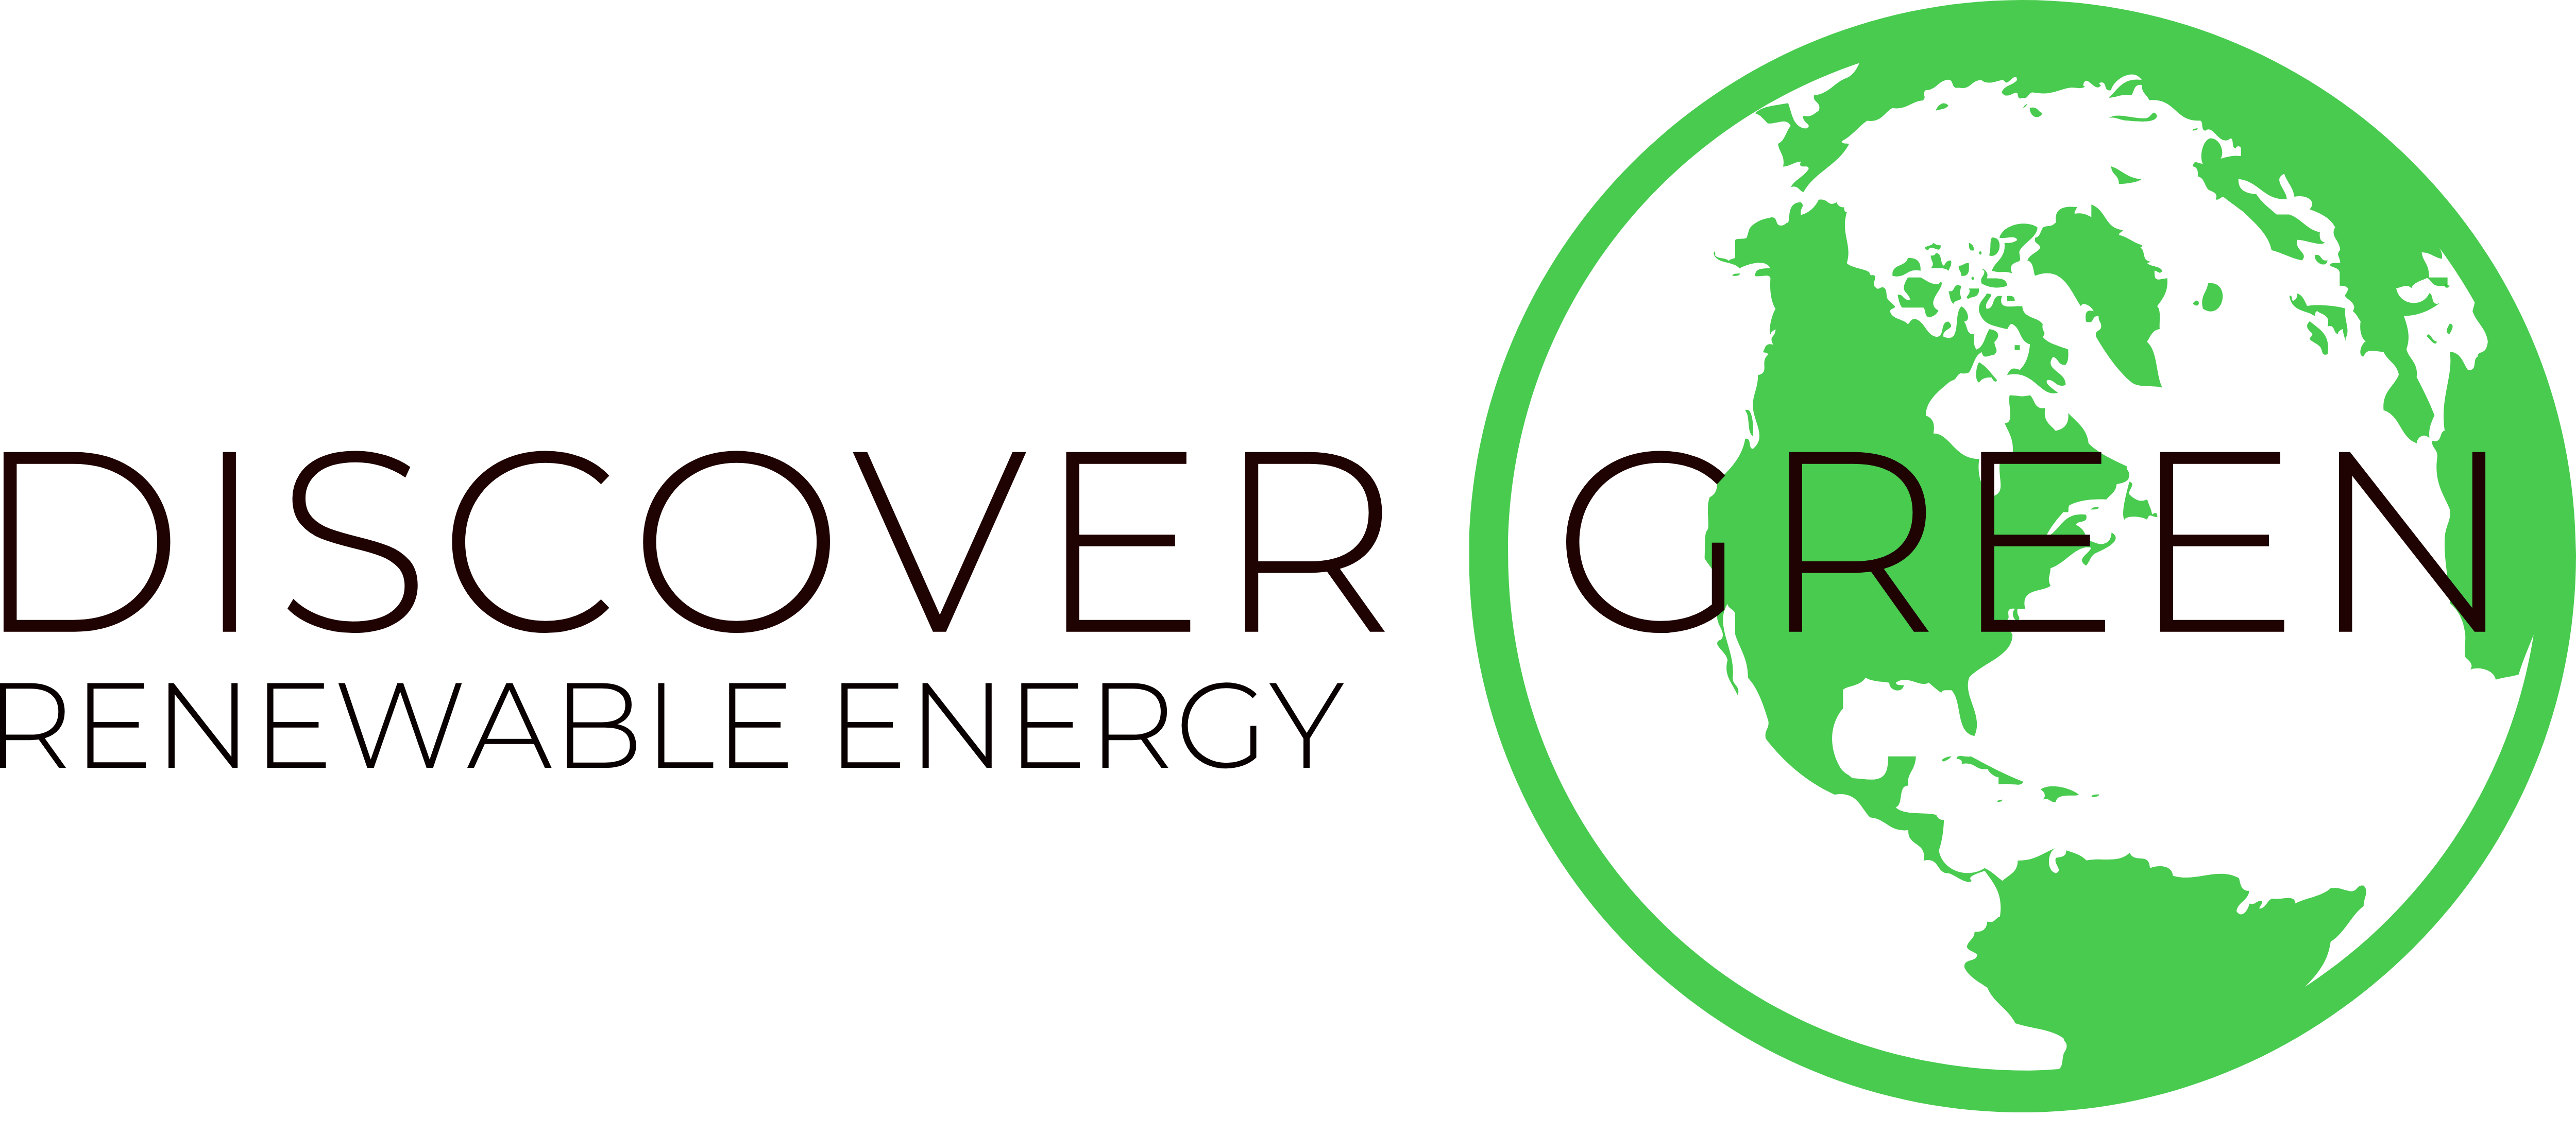 Discover Green Renewable Energy, LLC Logo